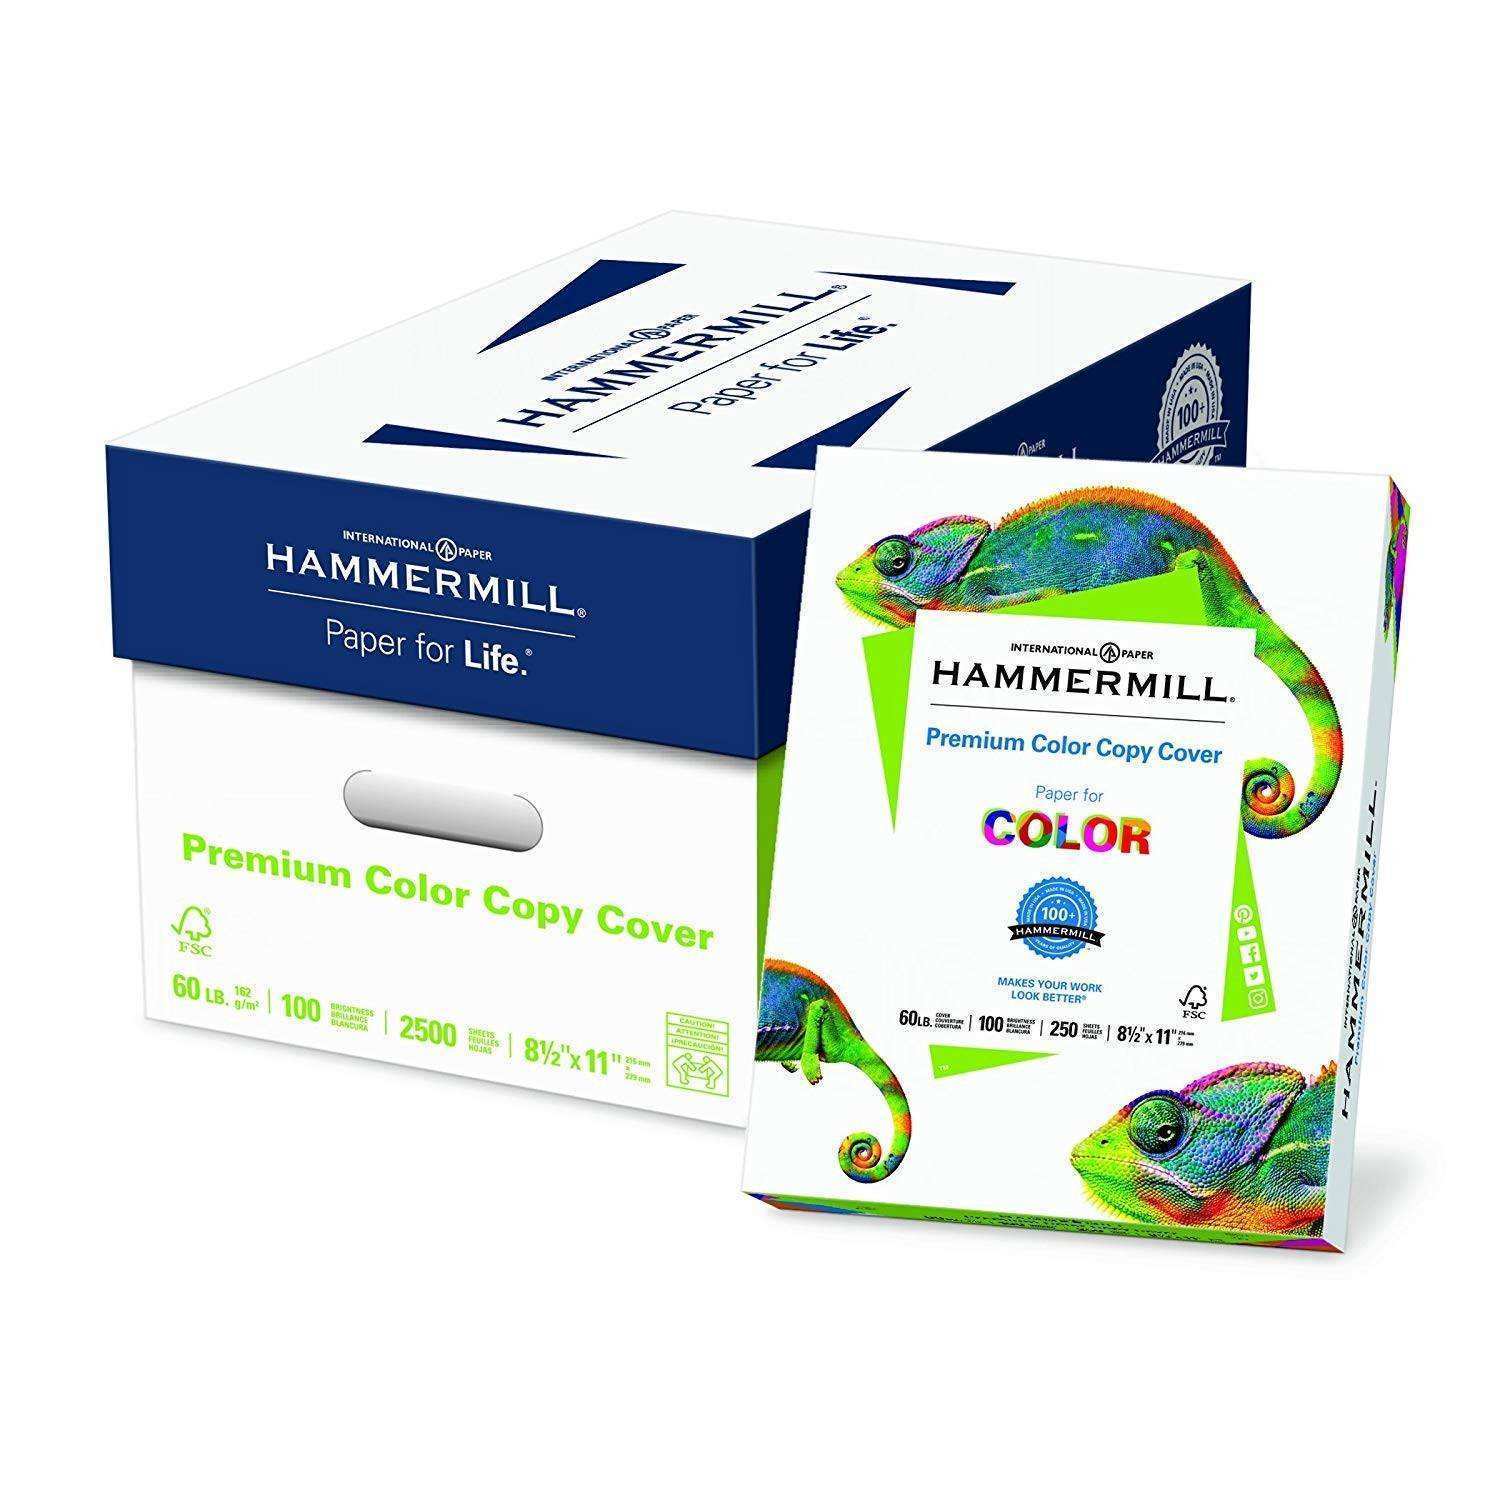 71 Free Business Card Template Hammermill Maker for Business Card Template Hammermill